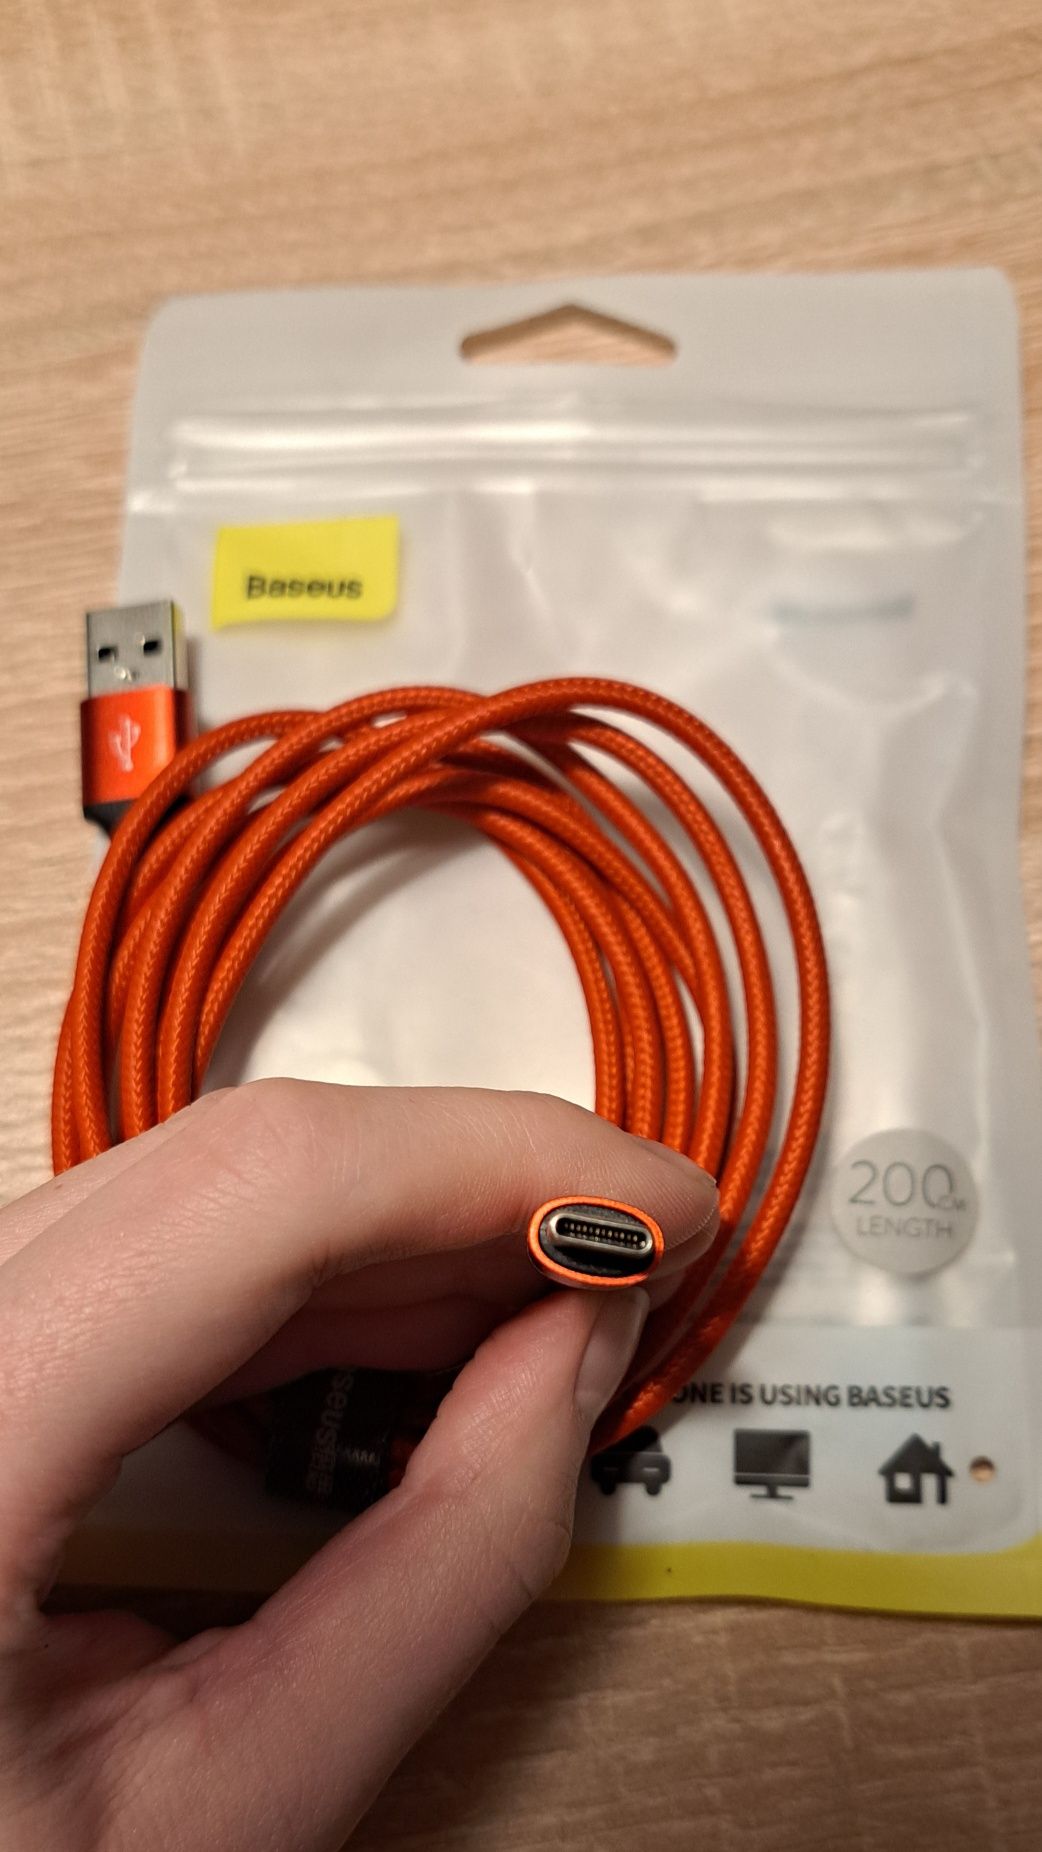 Kabel USB-A/USB-C Baseus 200cm